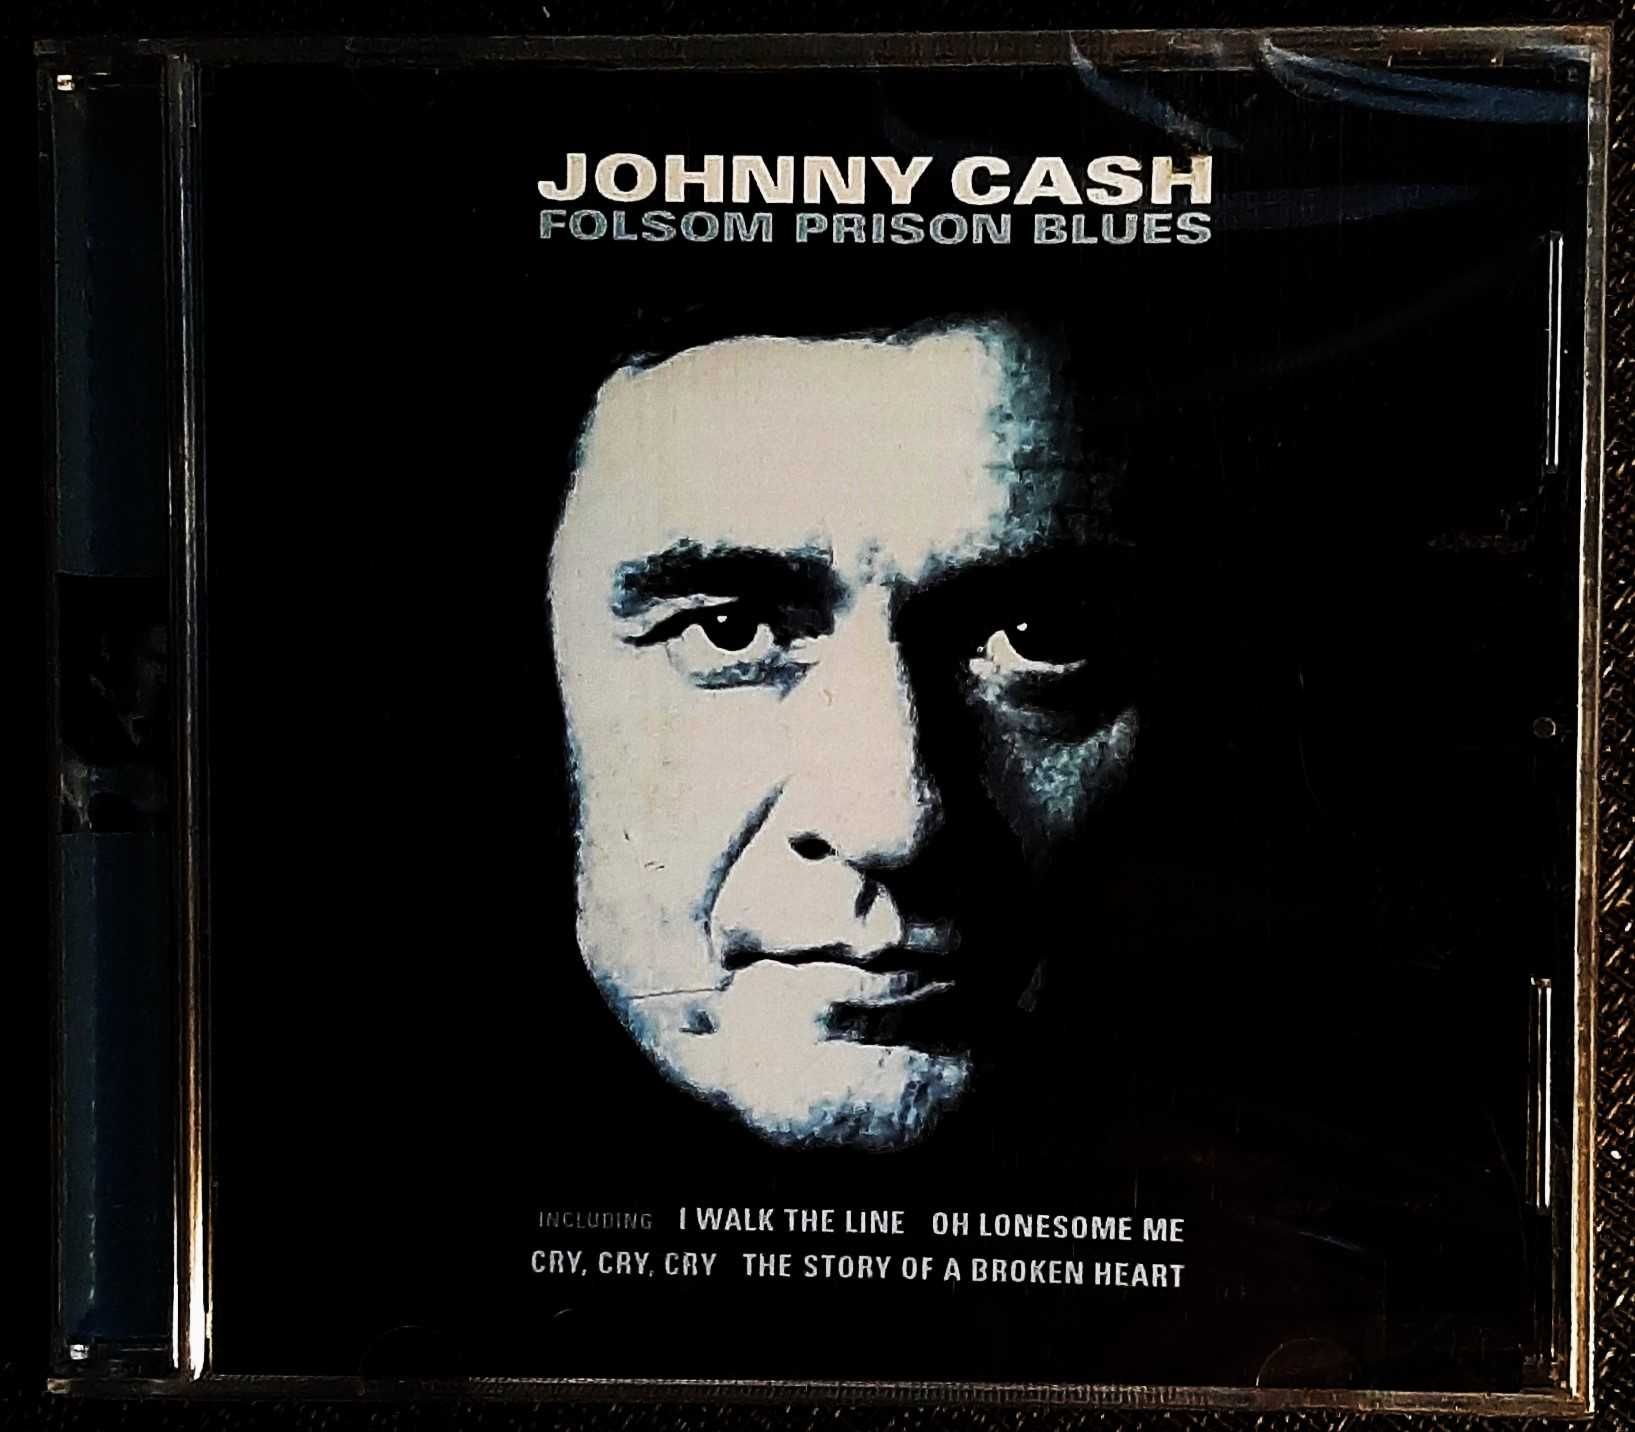 Polecam Album CD  JOHNNY CASH  The Man In Black 22  Hits